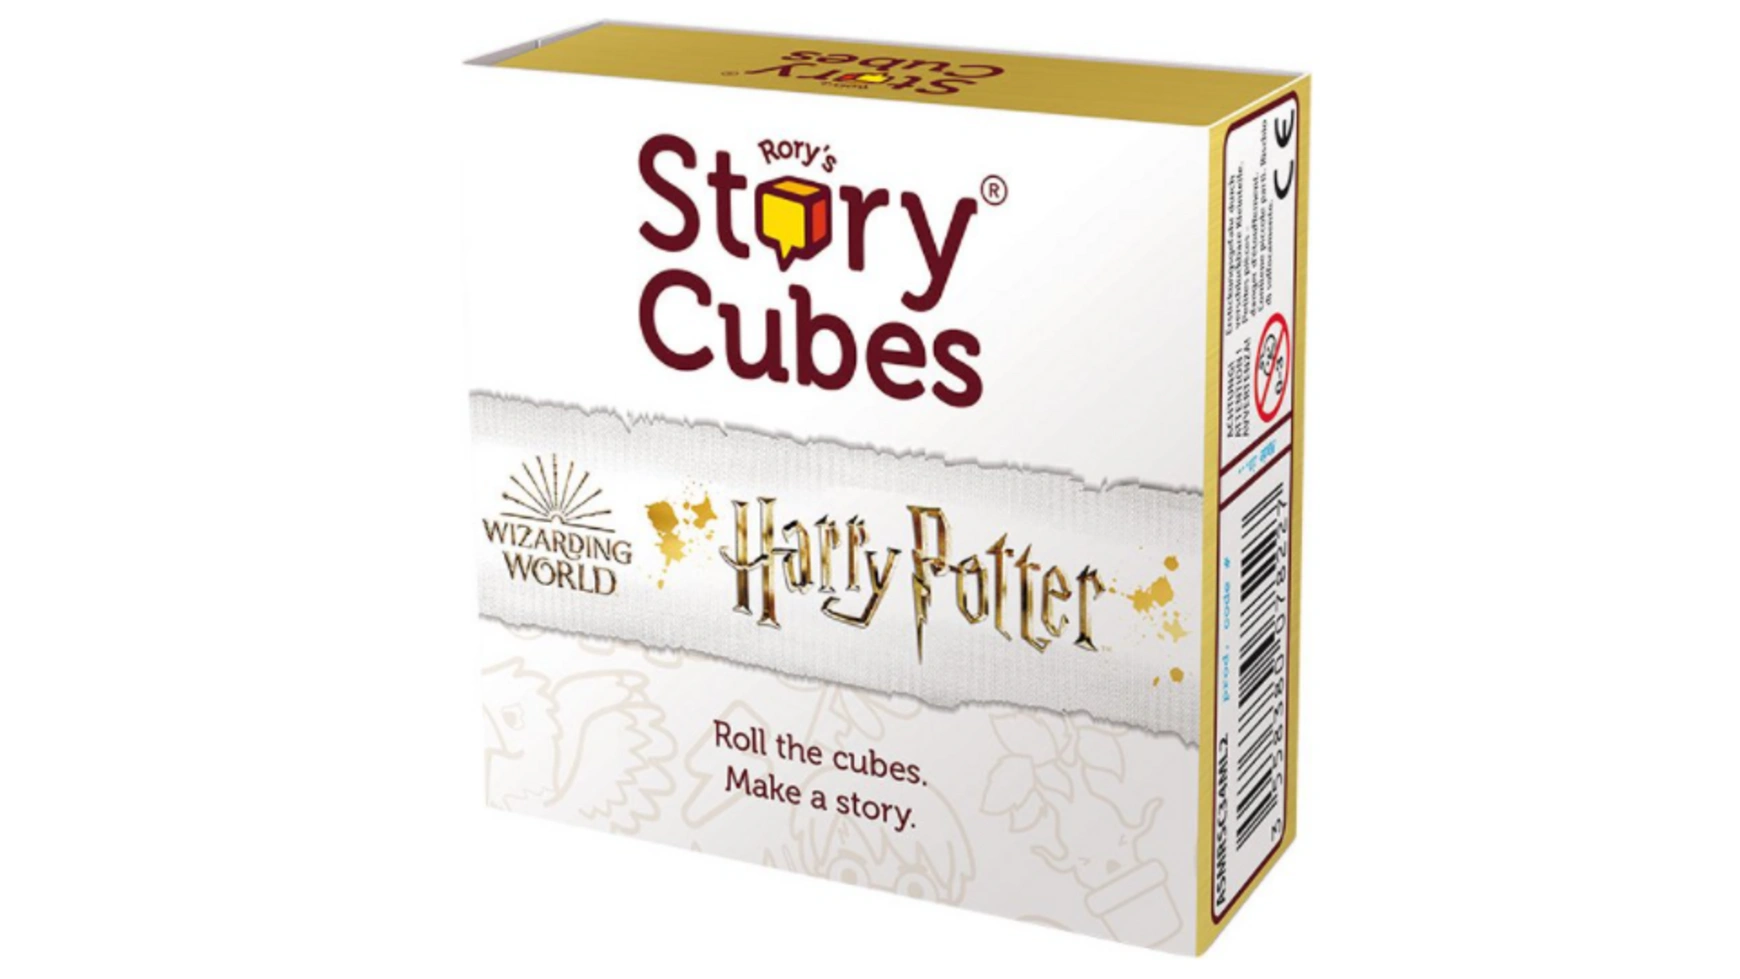 Rorys Story Cubes Кубики историй Рори: Гарри Поттер rubiks кубики историй путешествия